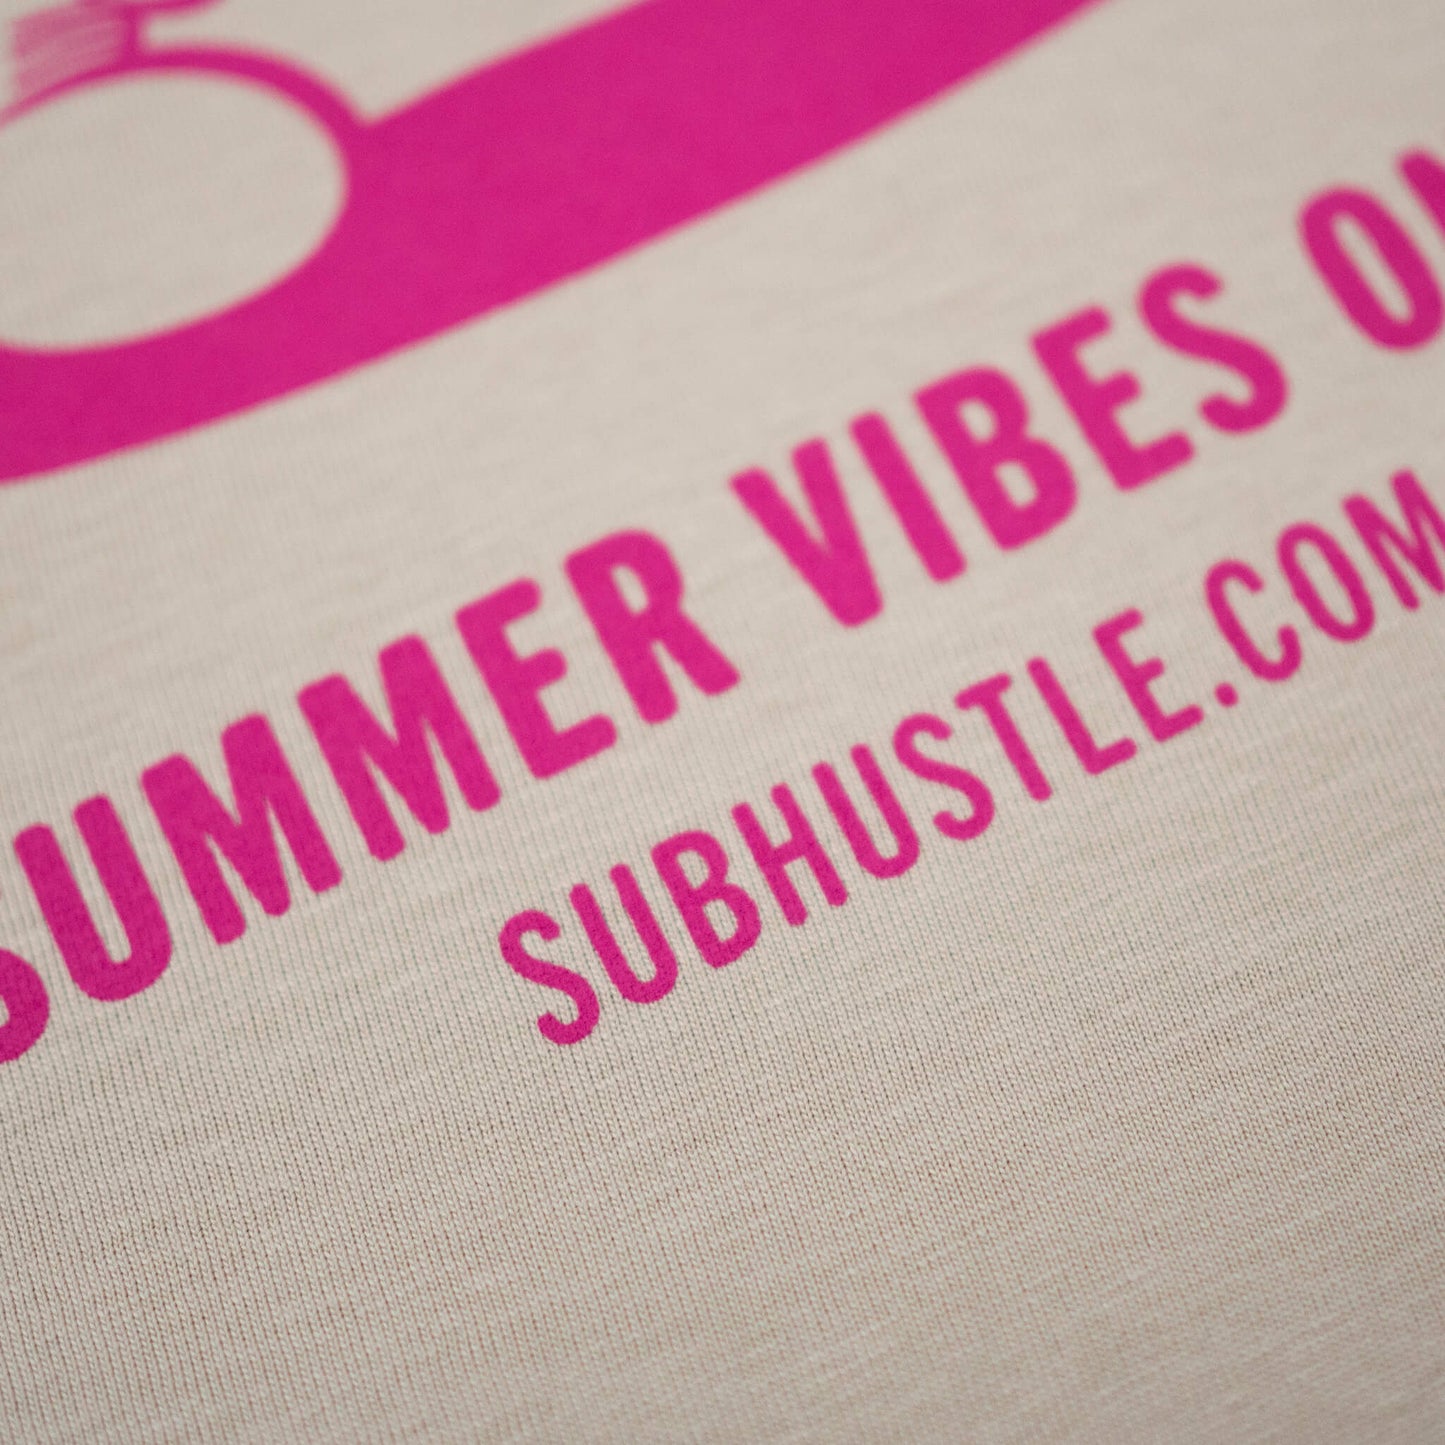 Summer vibes only subhustle dust t-shirt detail